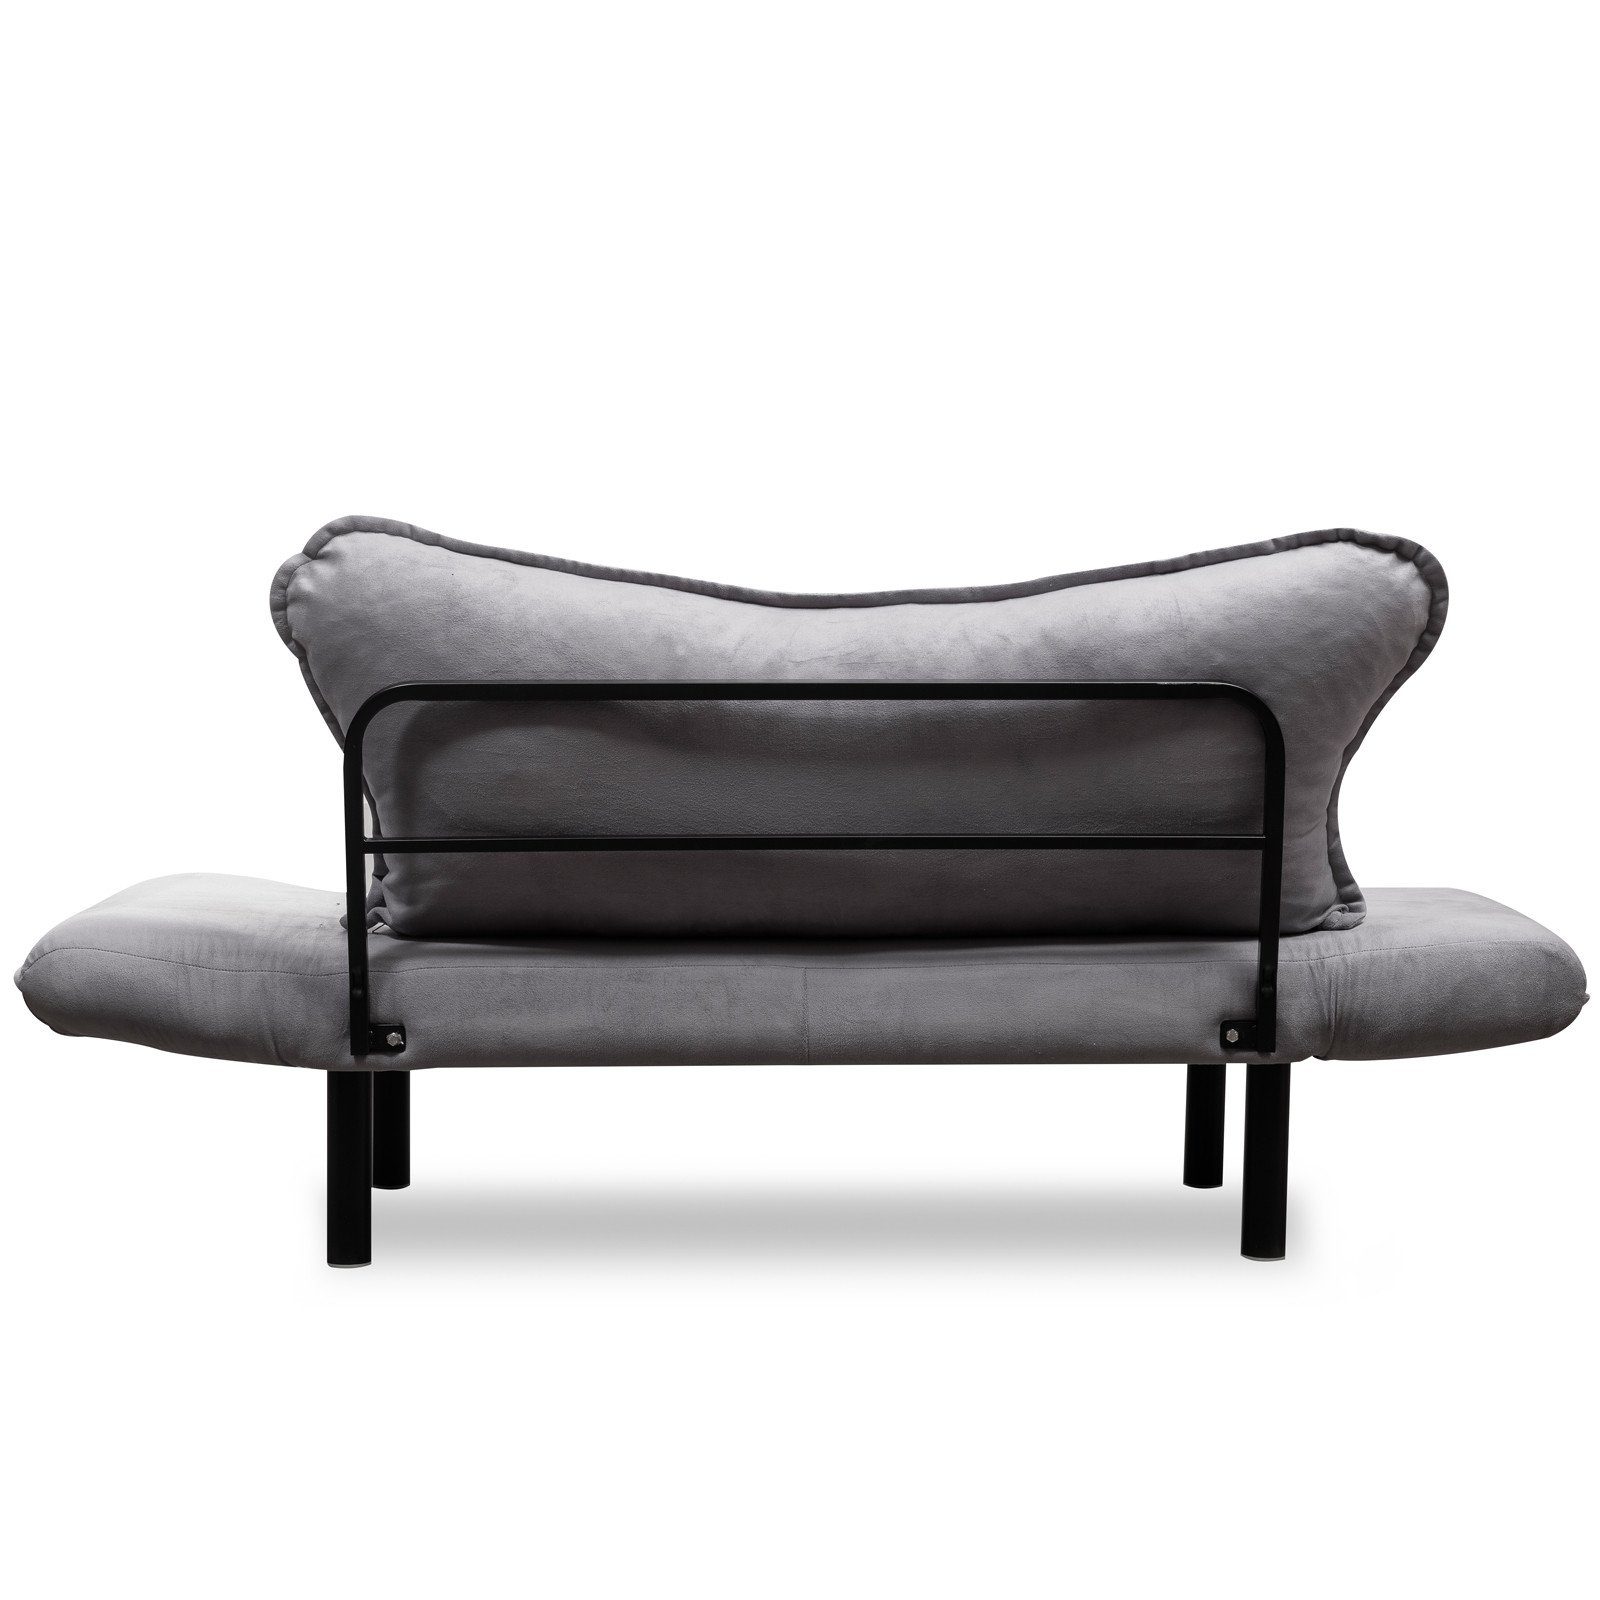 Sofa FTN1229 Skye Decor